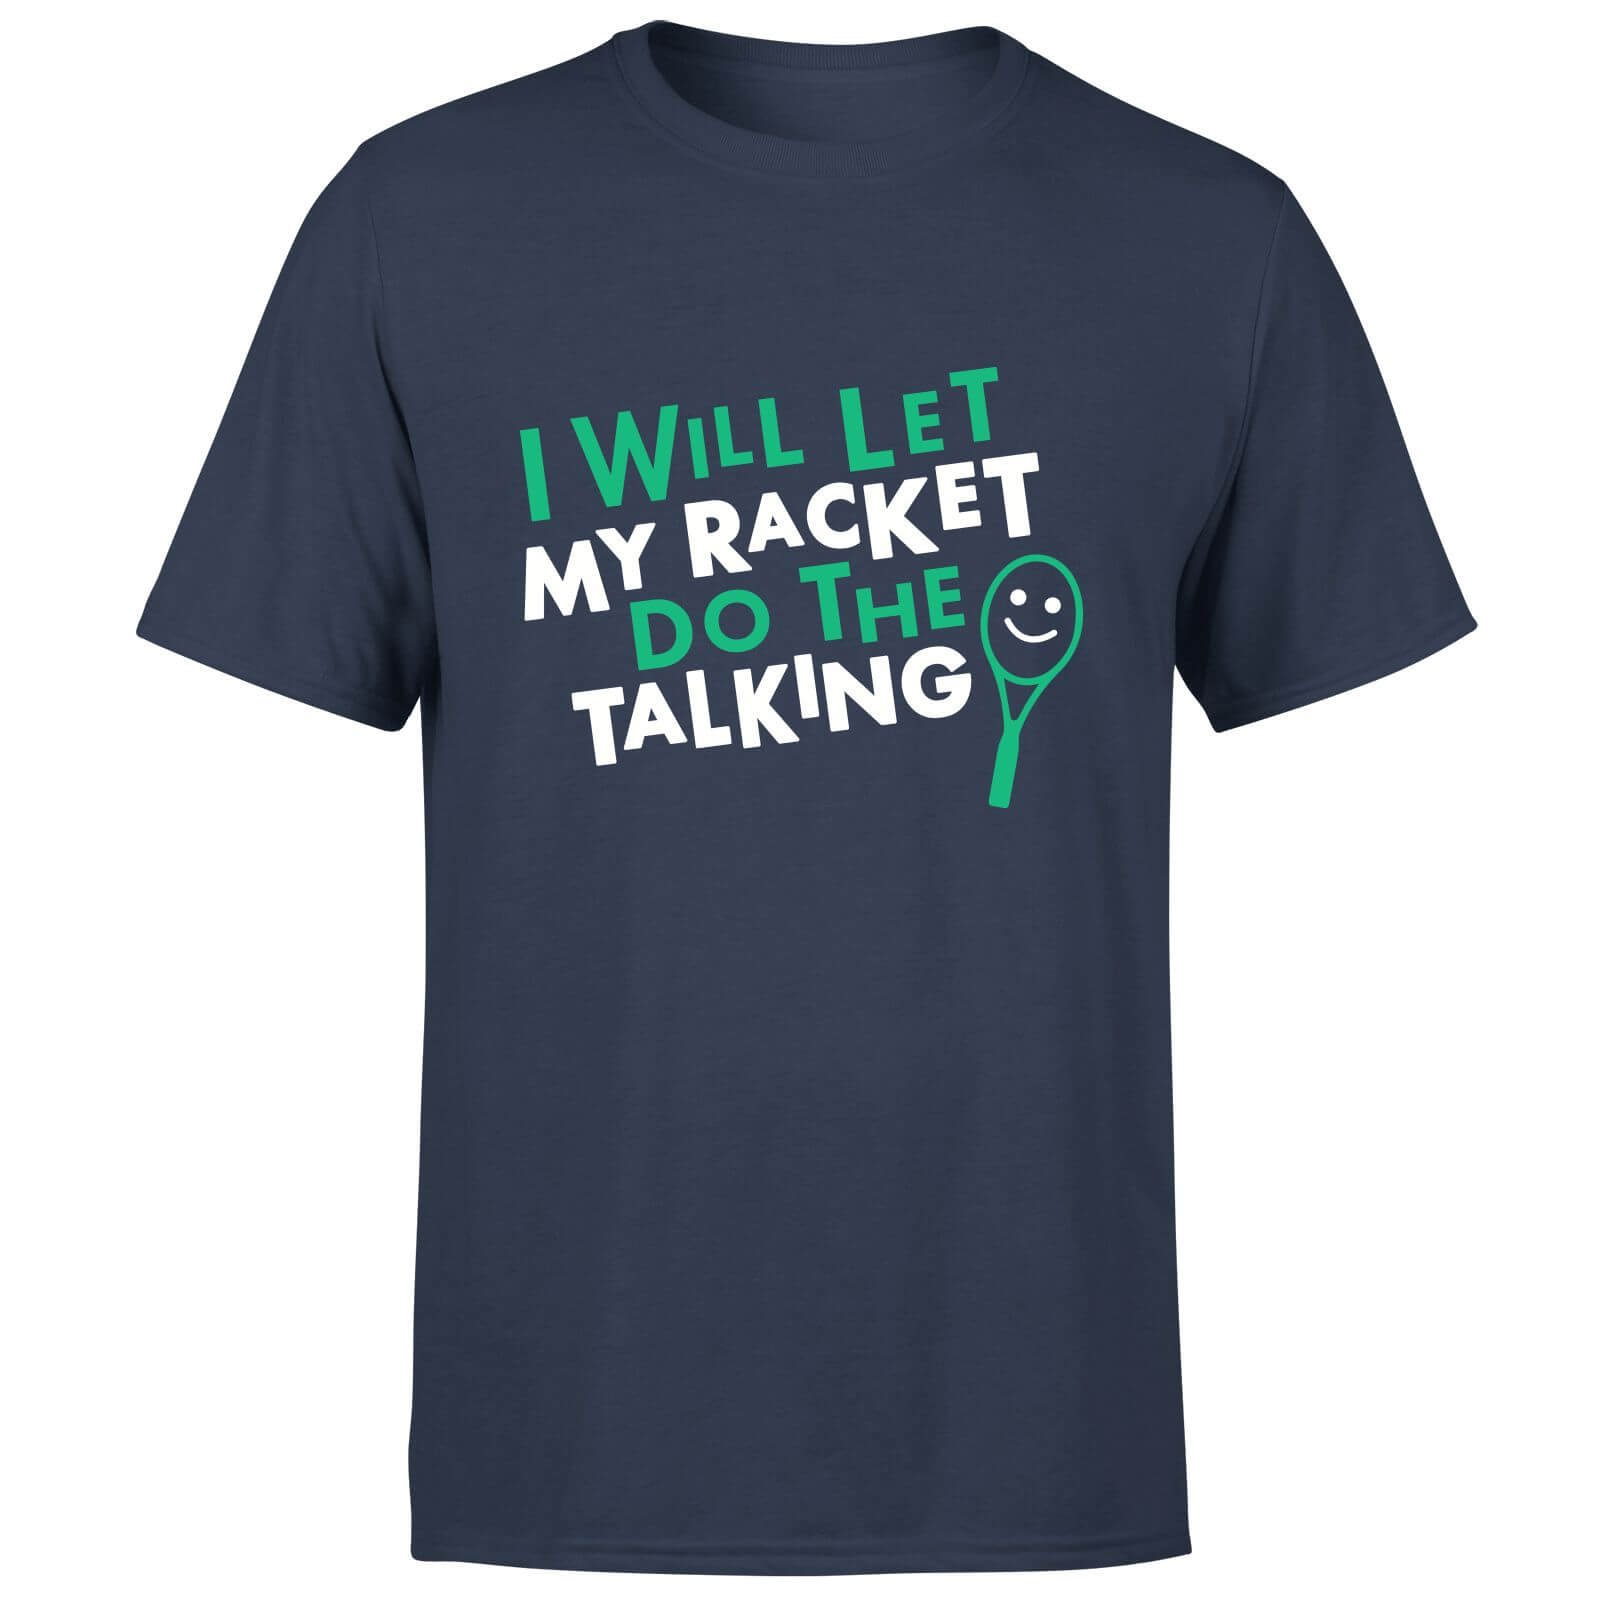 I will let my Racket do the Talking T-Shirt - Navy - S - Navy